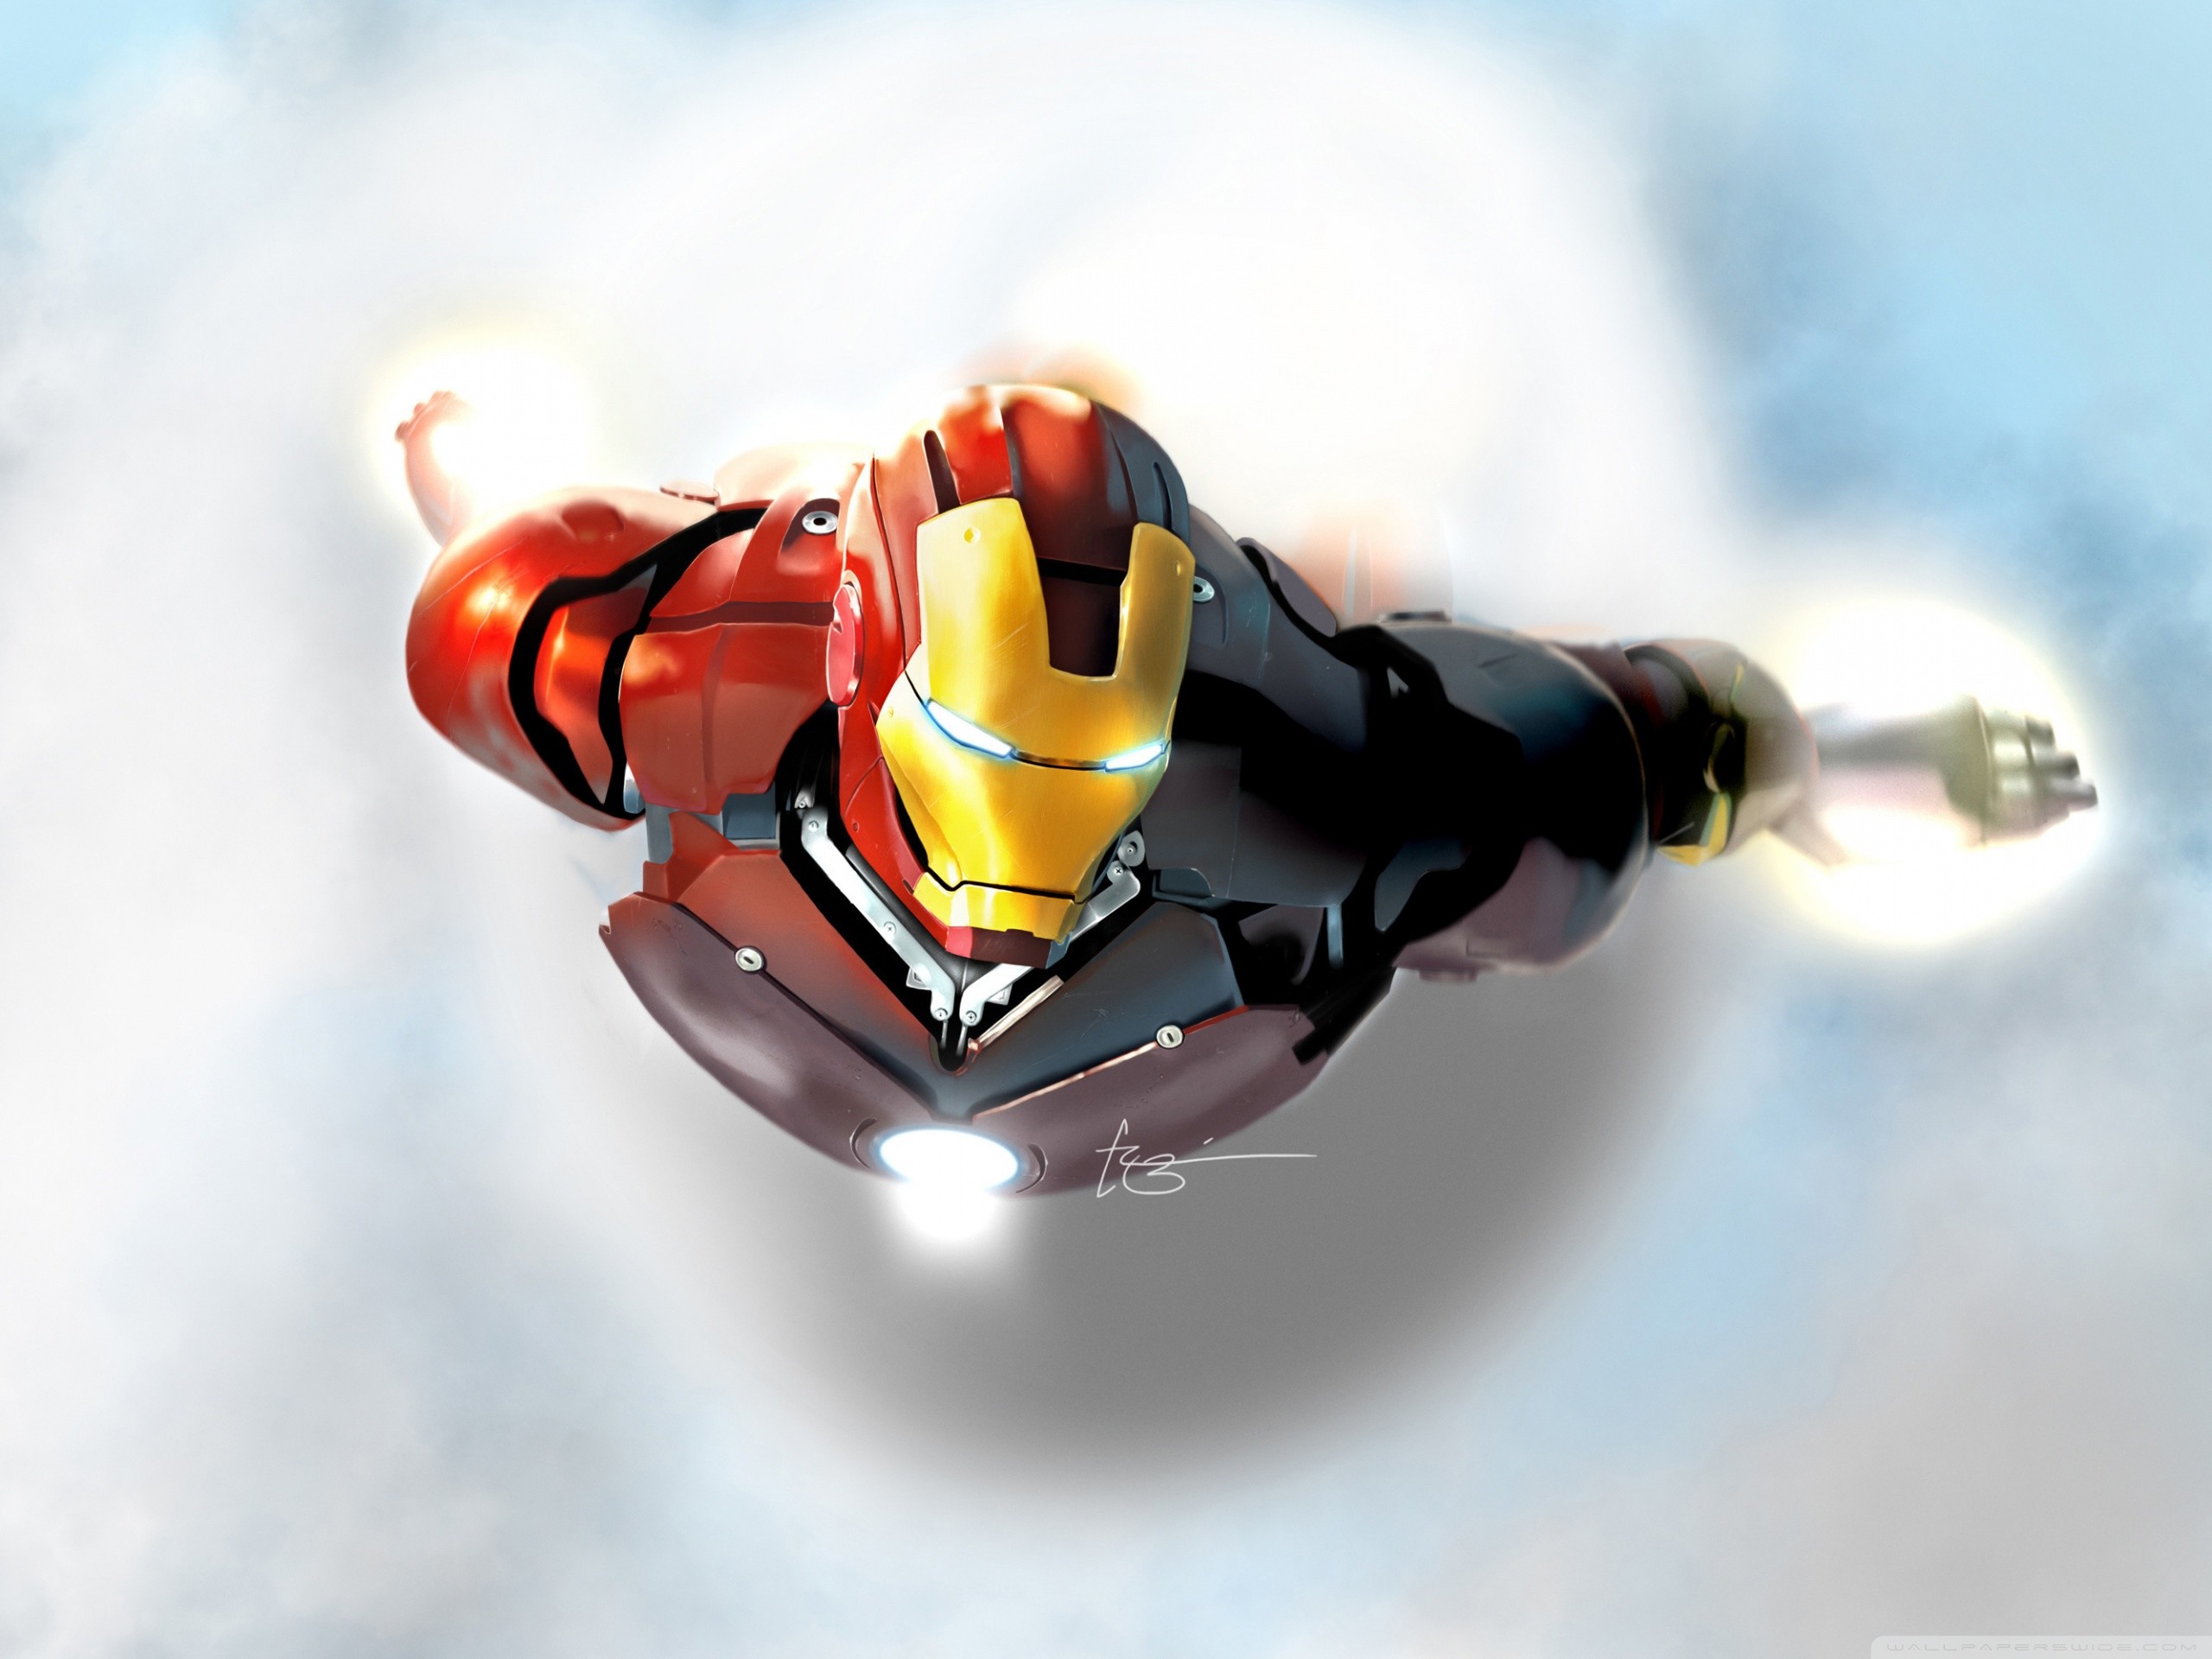 2560x1920 best ideas about Iron man wallpaper on Pinterest Iron man